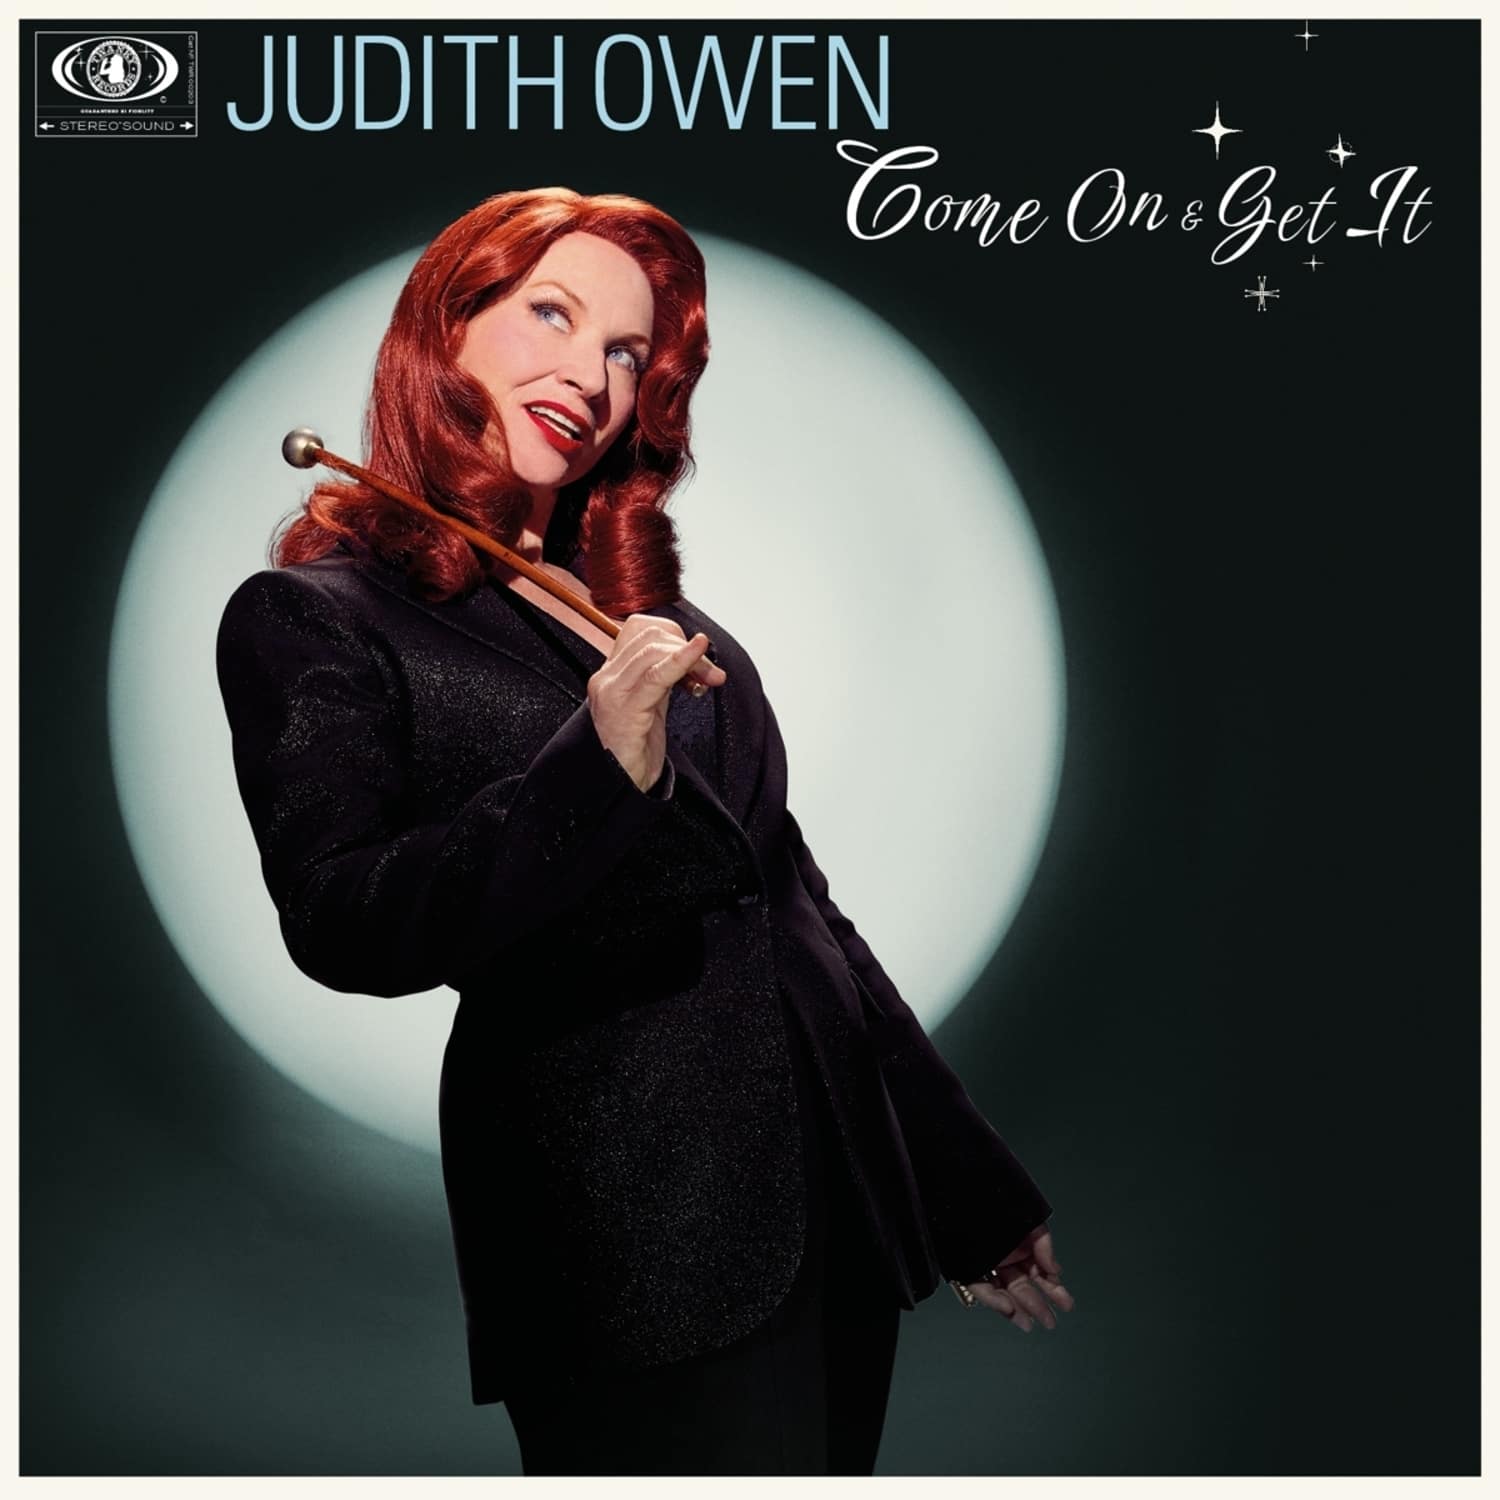  Judith Owen - COME ON & GET IT 